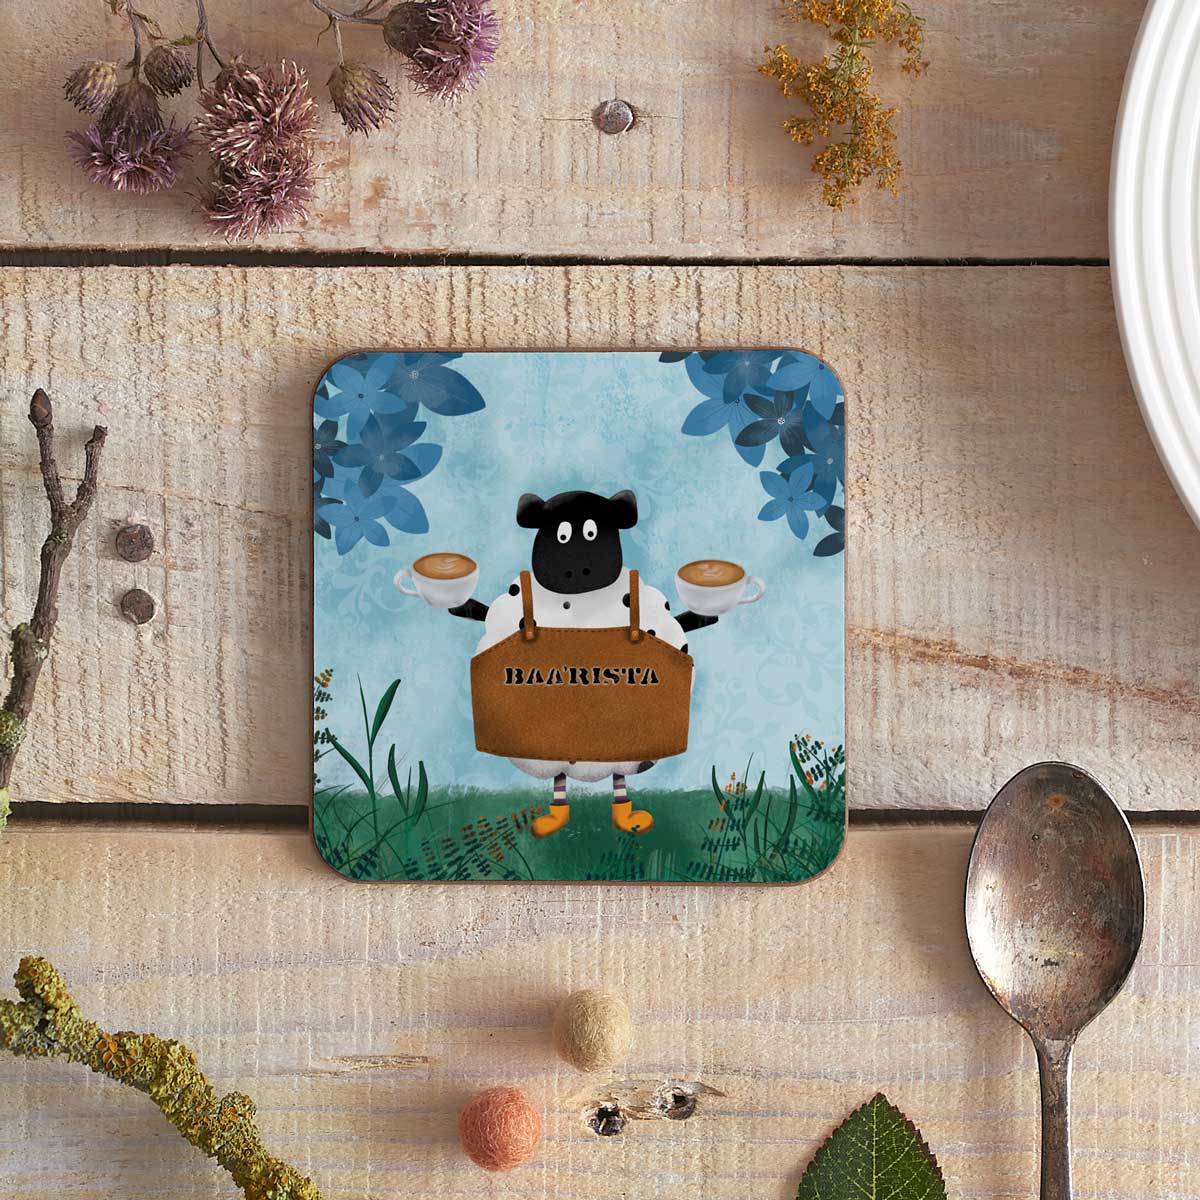 square coaster with baa'rista sheep illustration